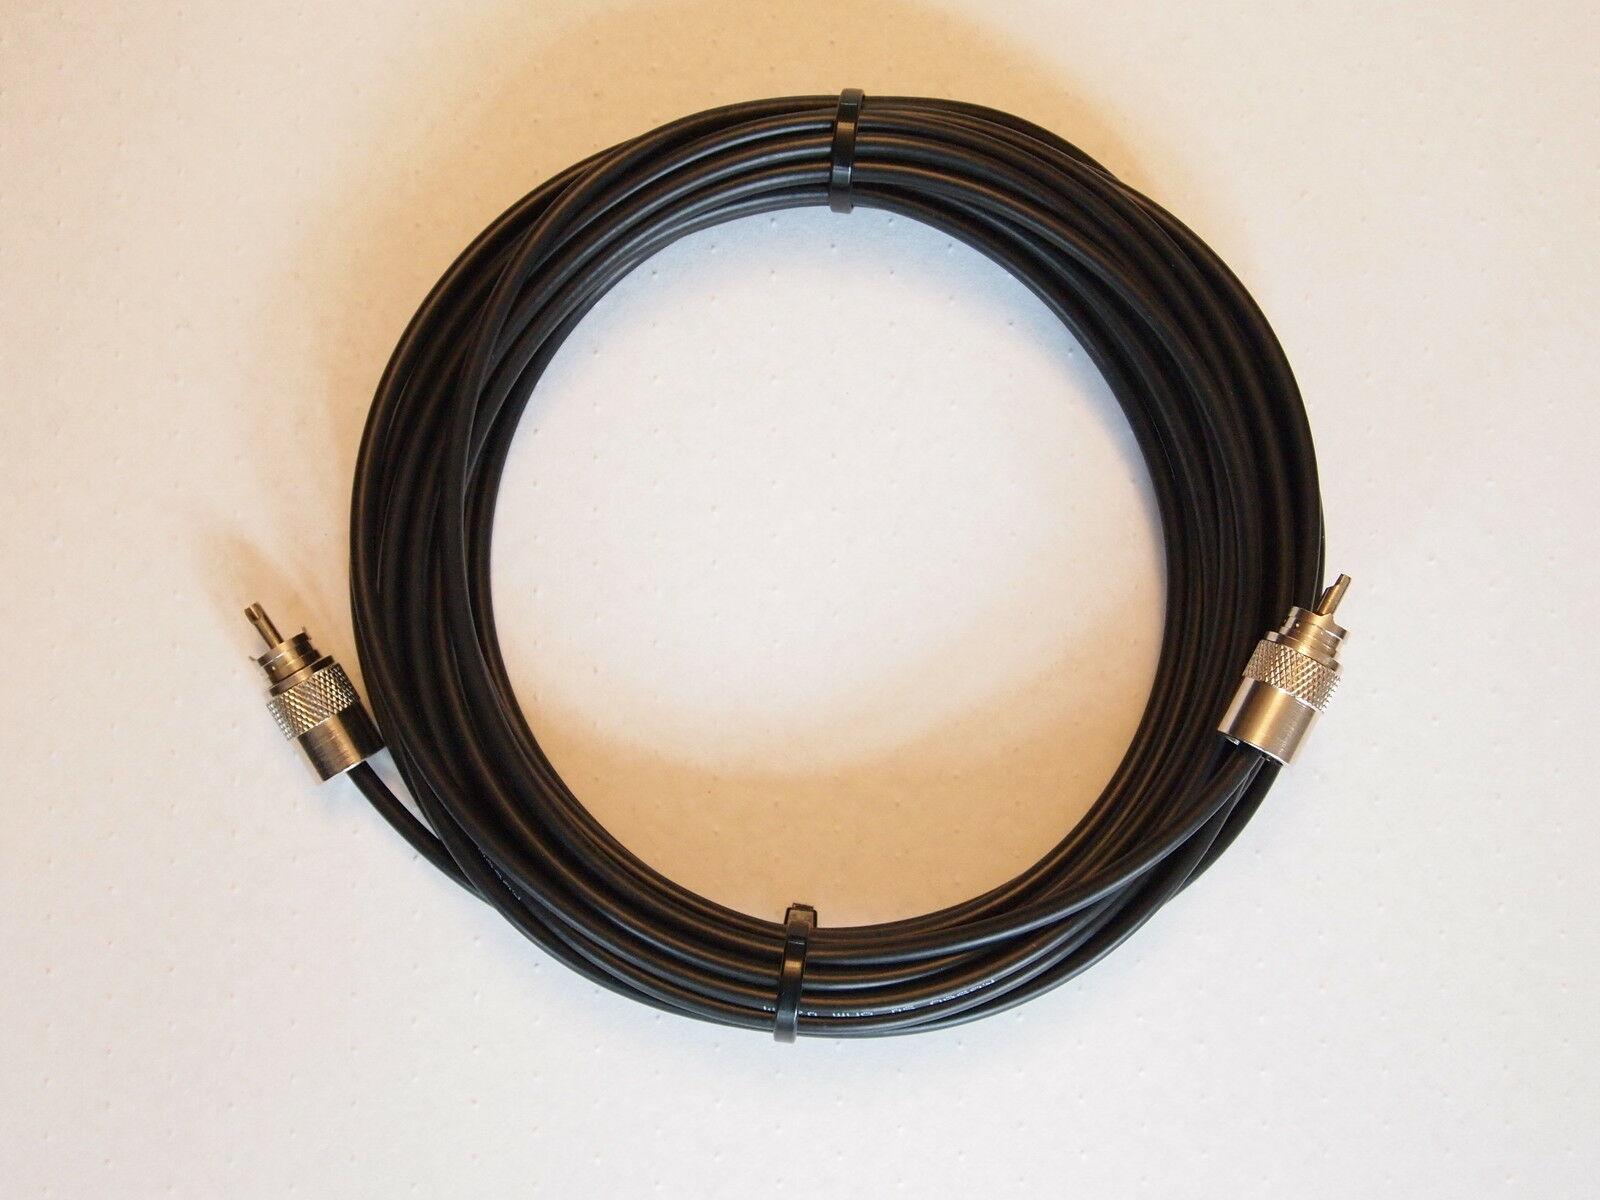 Sigma RG-58 Military Spec Coax cable 15 Metre Lead 2 x PL259 Male Connectors